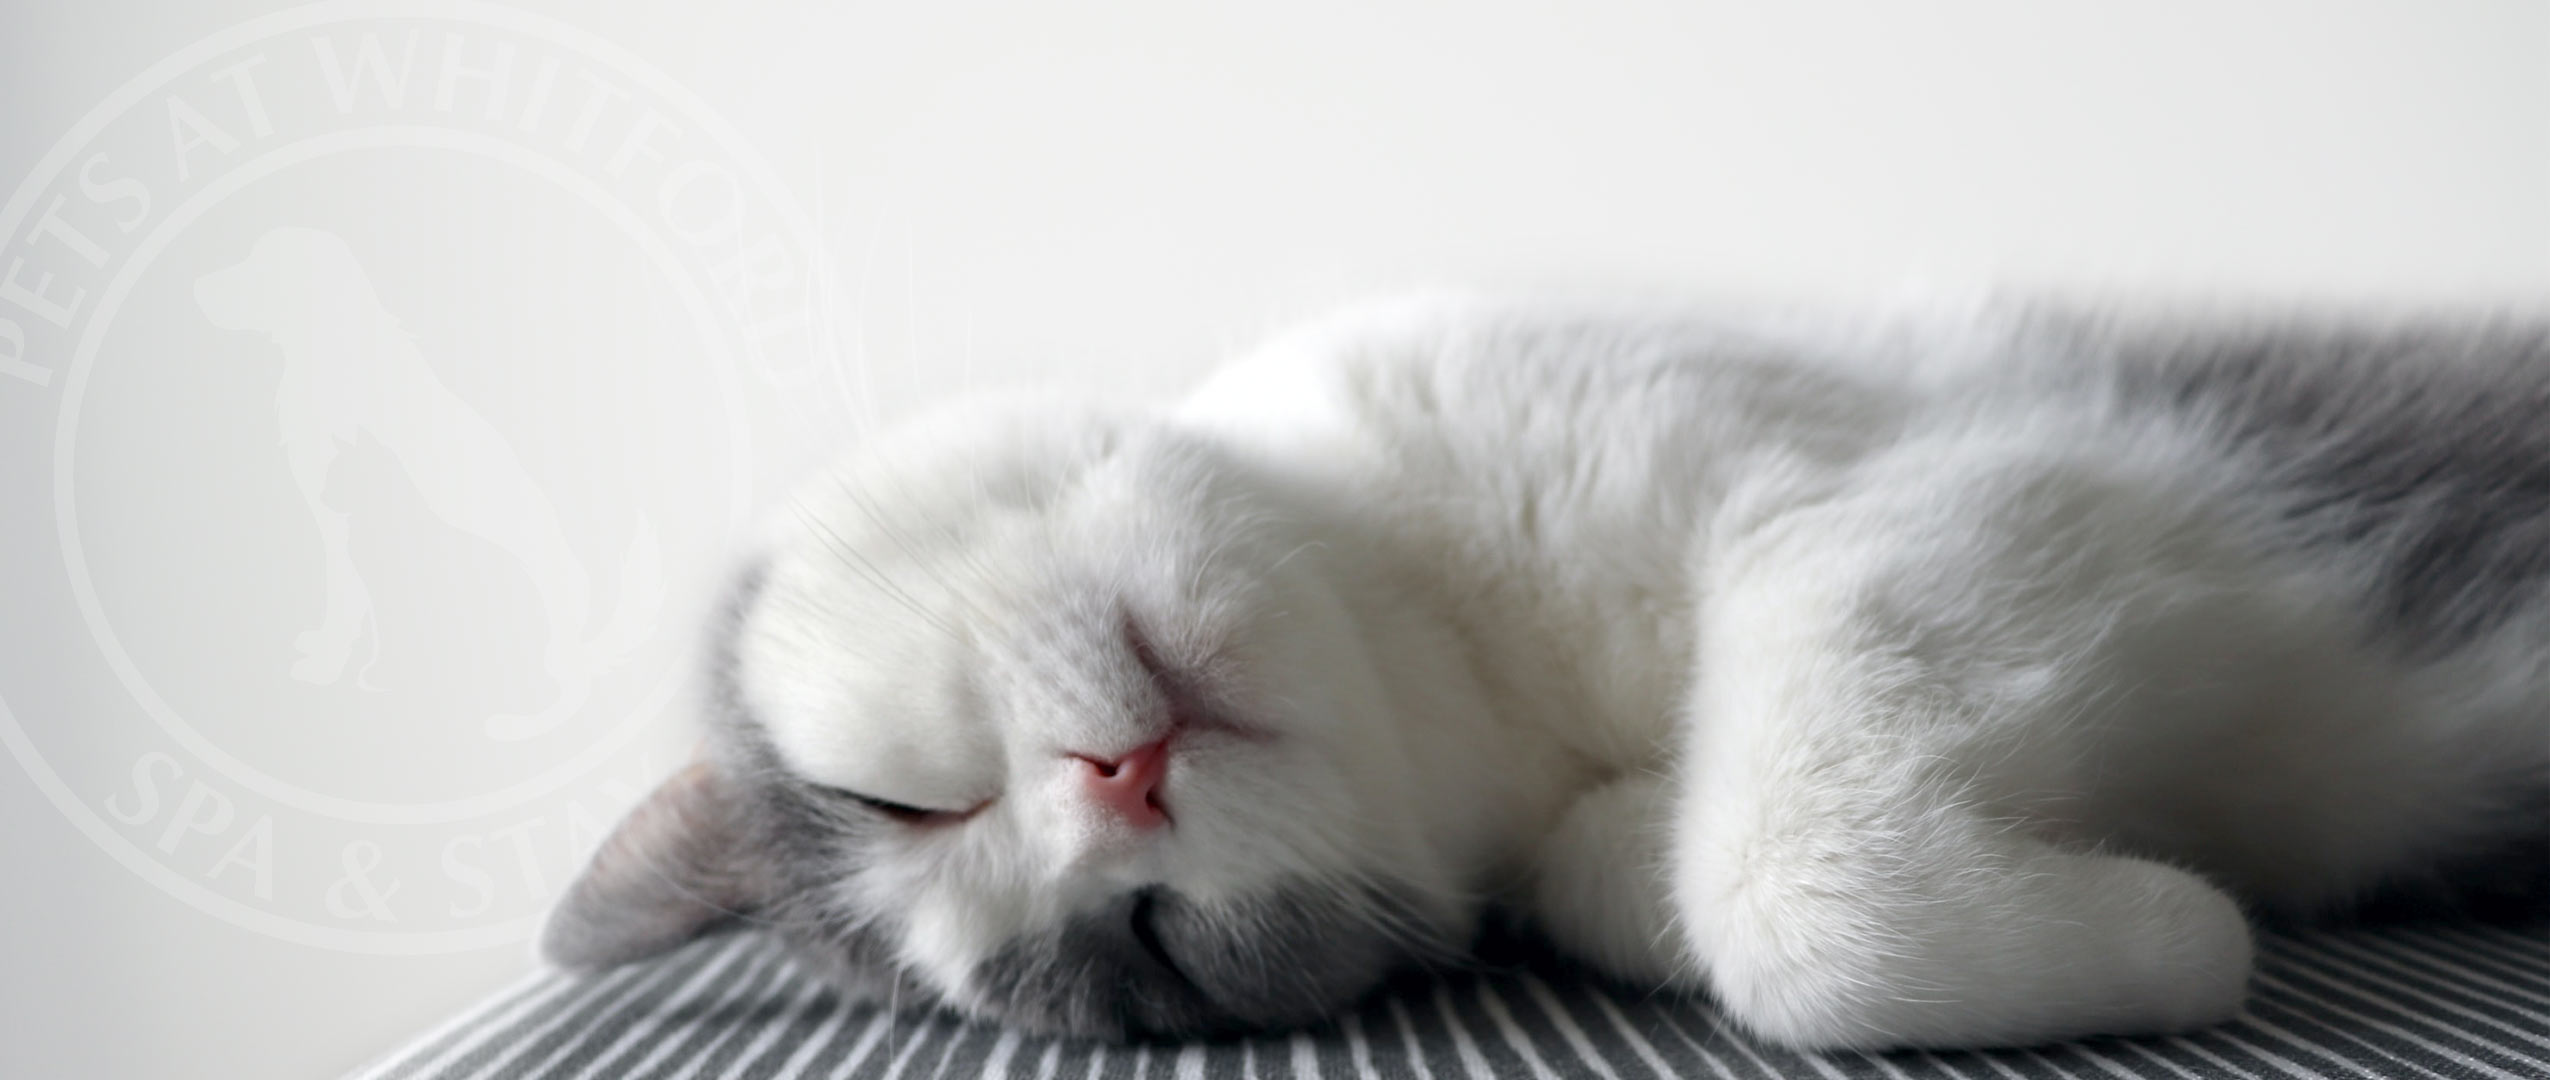 Cat sleeping on mat